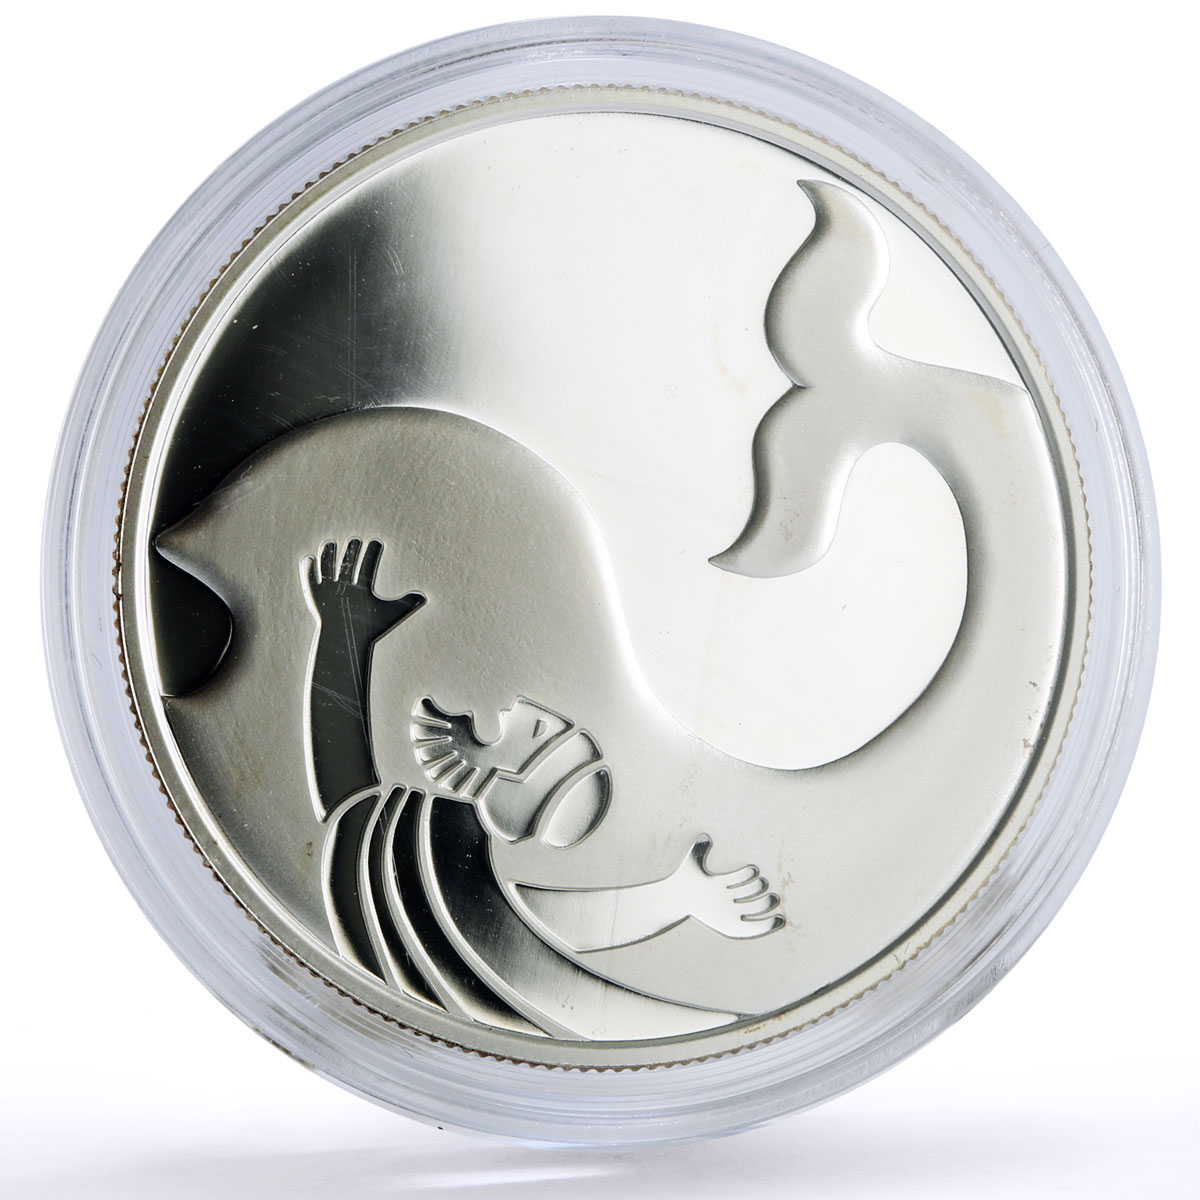 Israel 2 sheqalim Biblical Art Johan in the Whale proof silver coin 2010